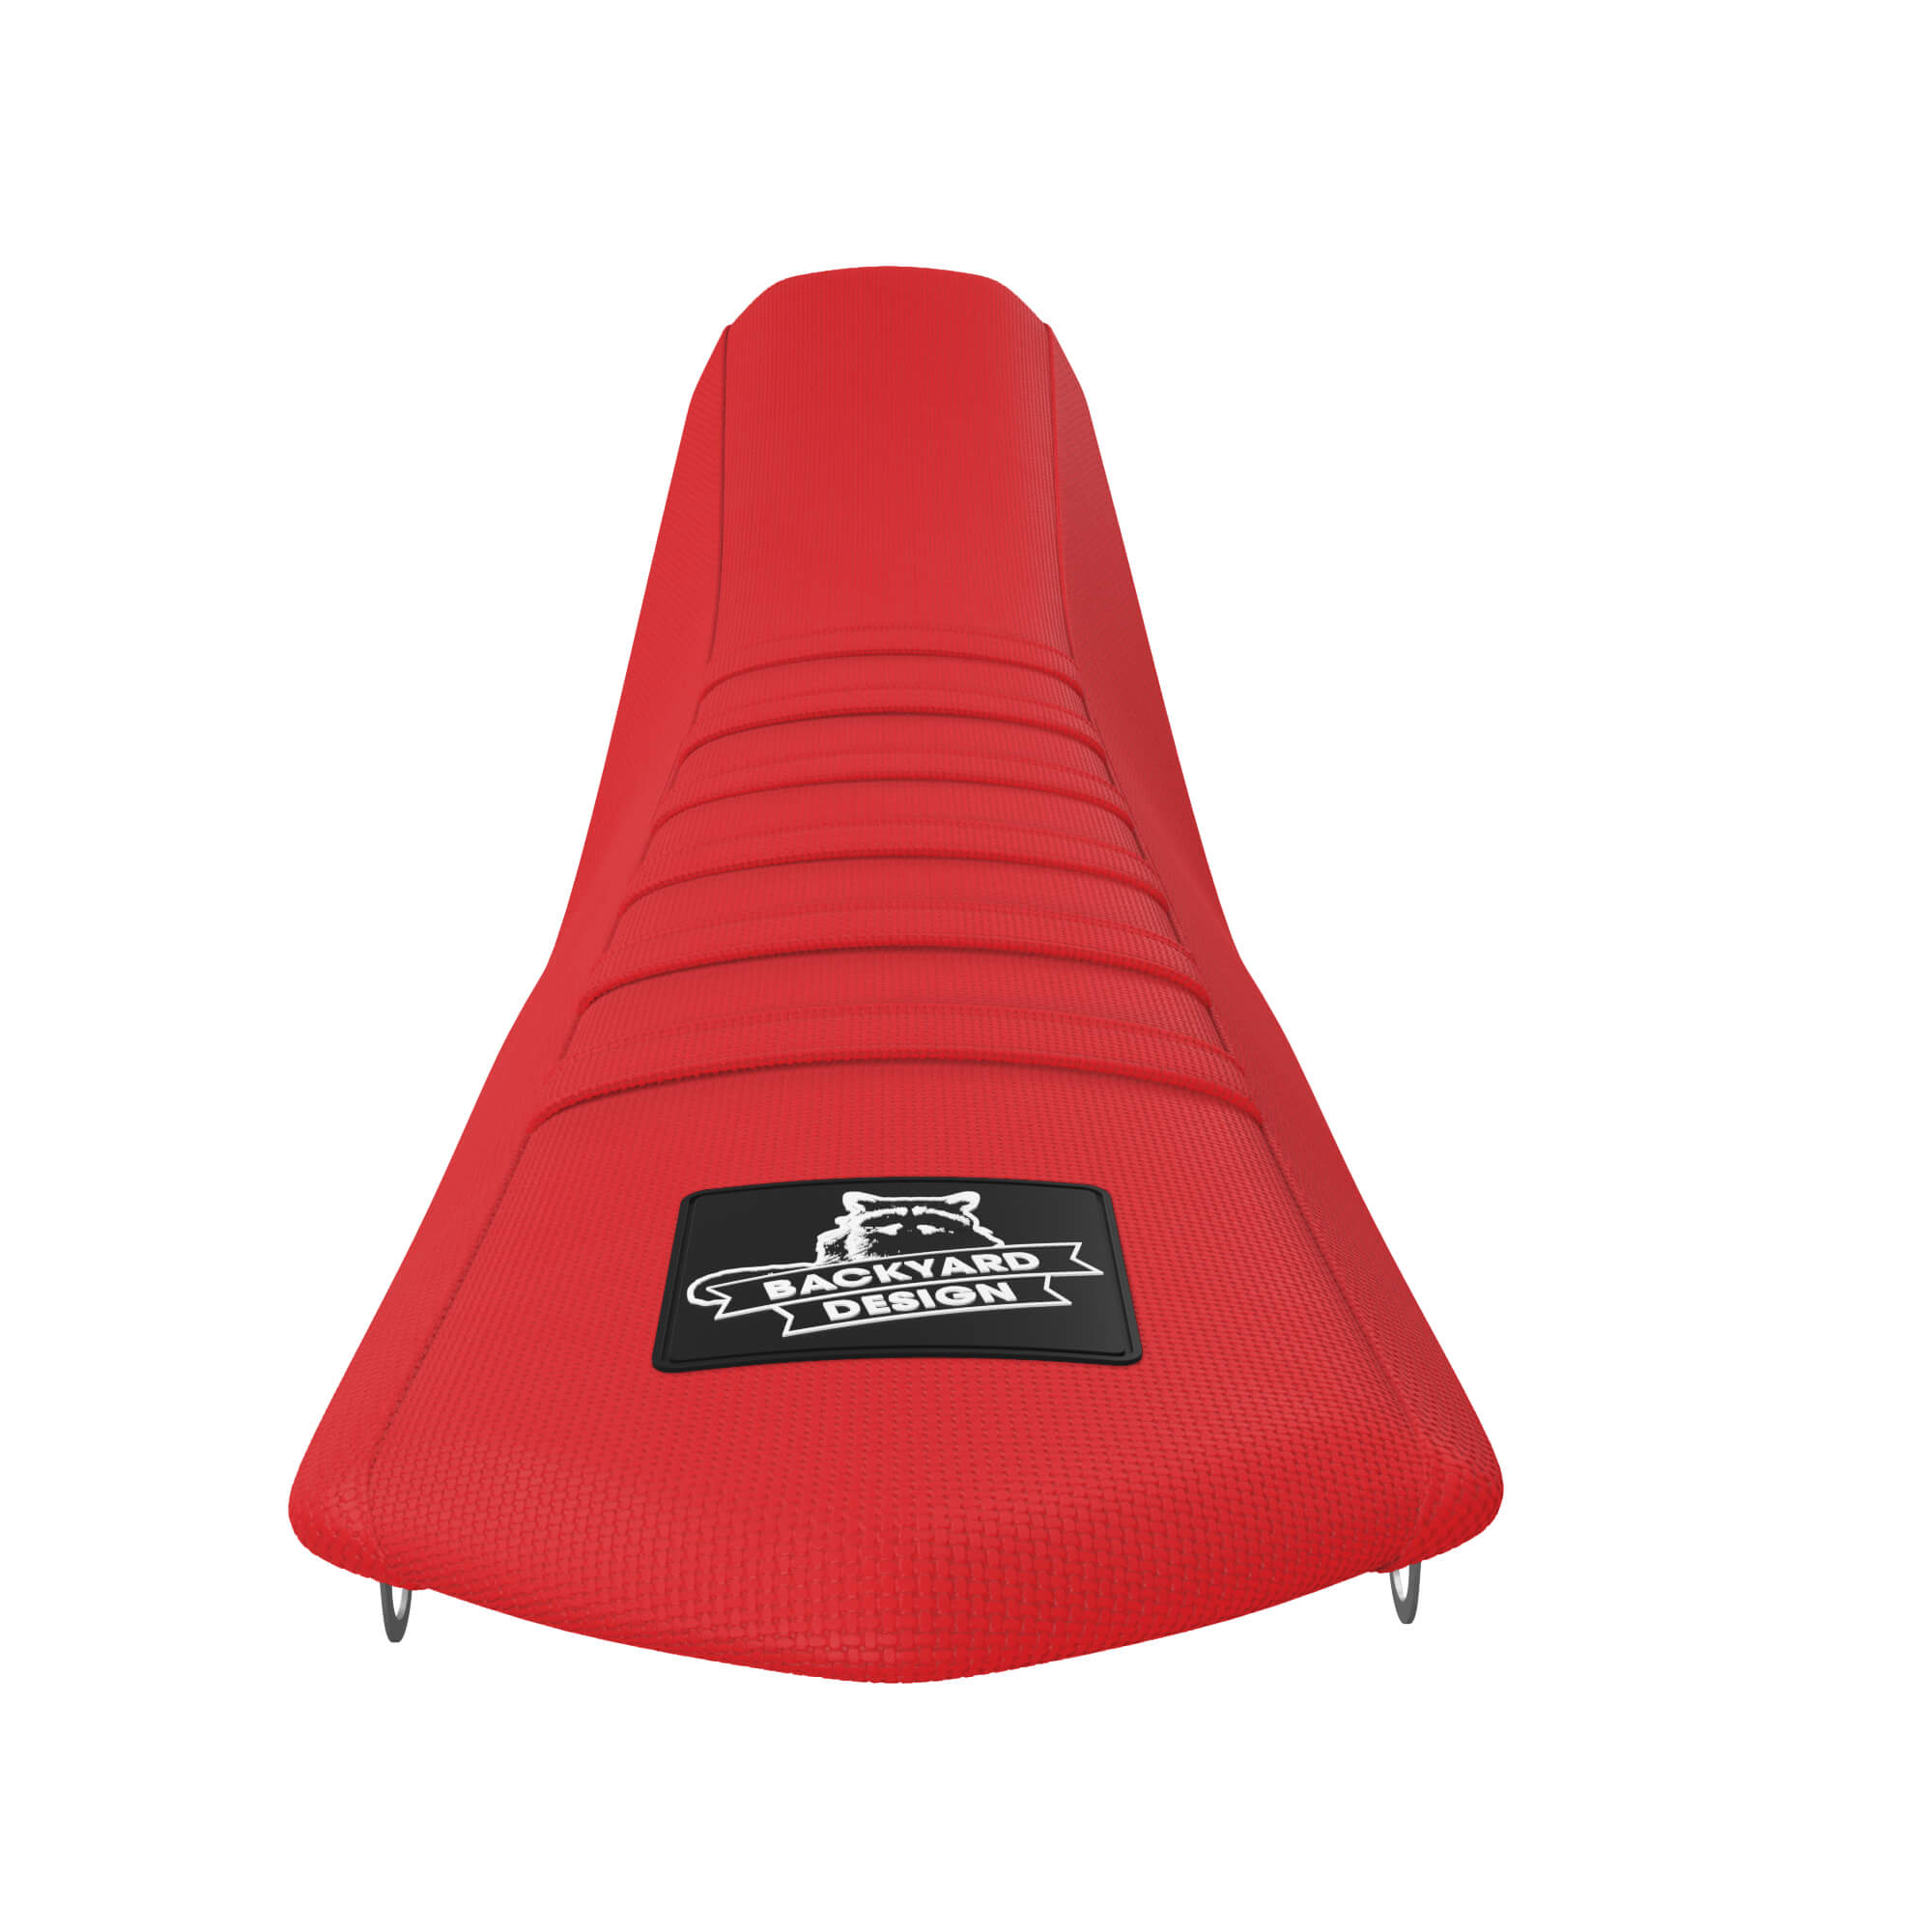 Zaida Motorcycle Gripper Soft Seat Cover Seat Cushions For Honda XR50 CR85 125R 250R 500R Red 